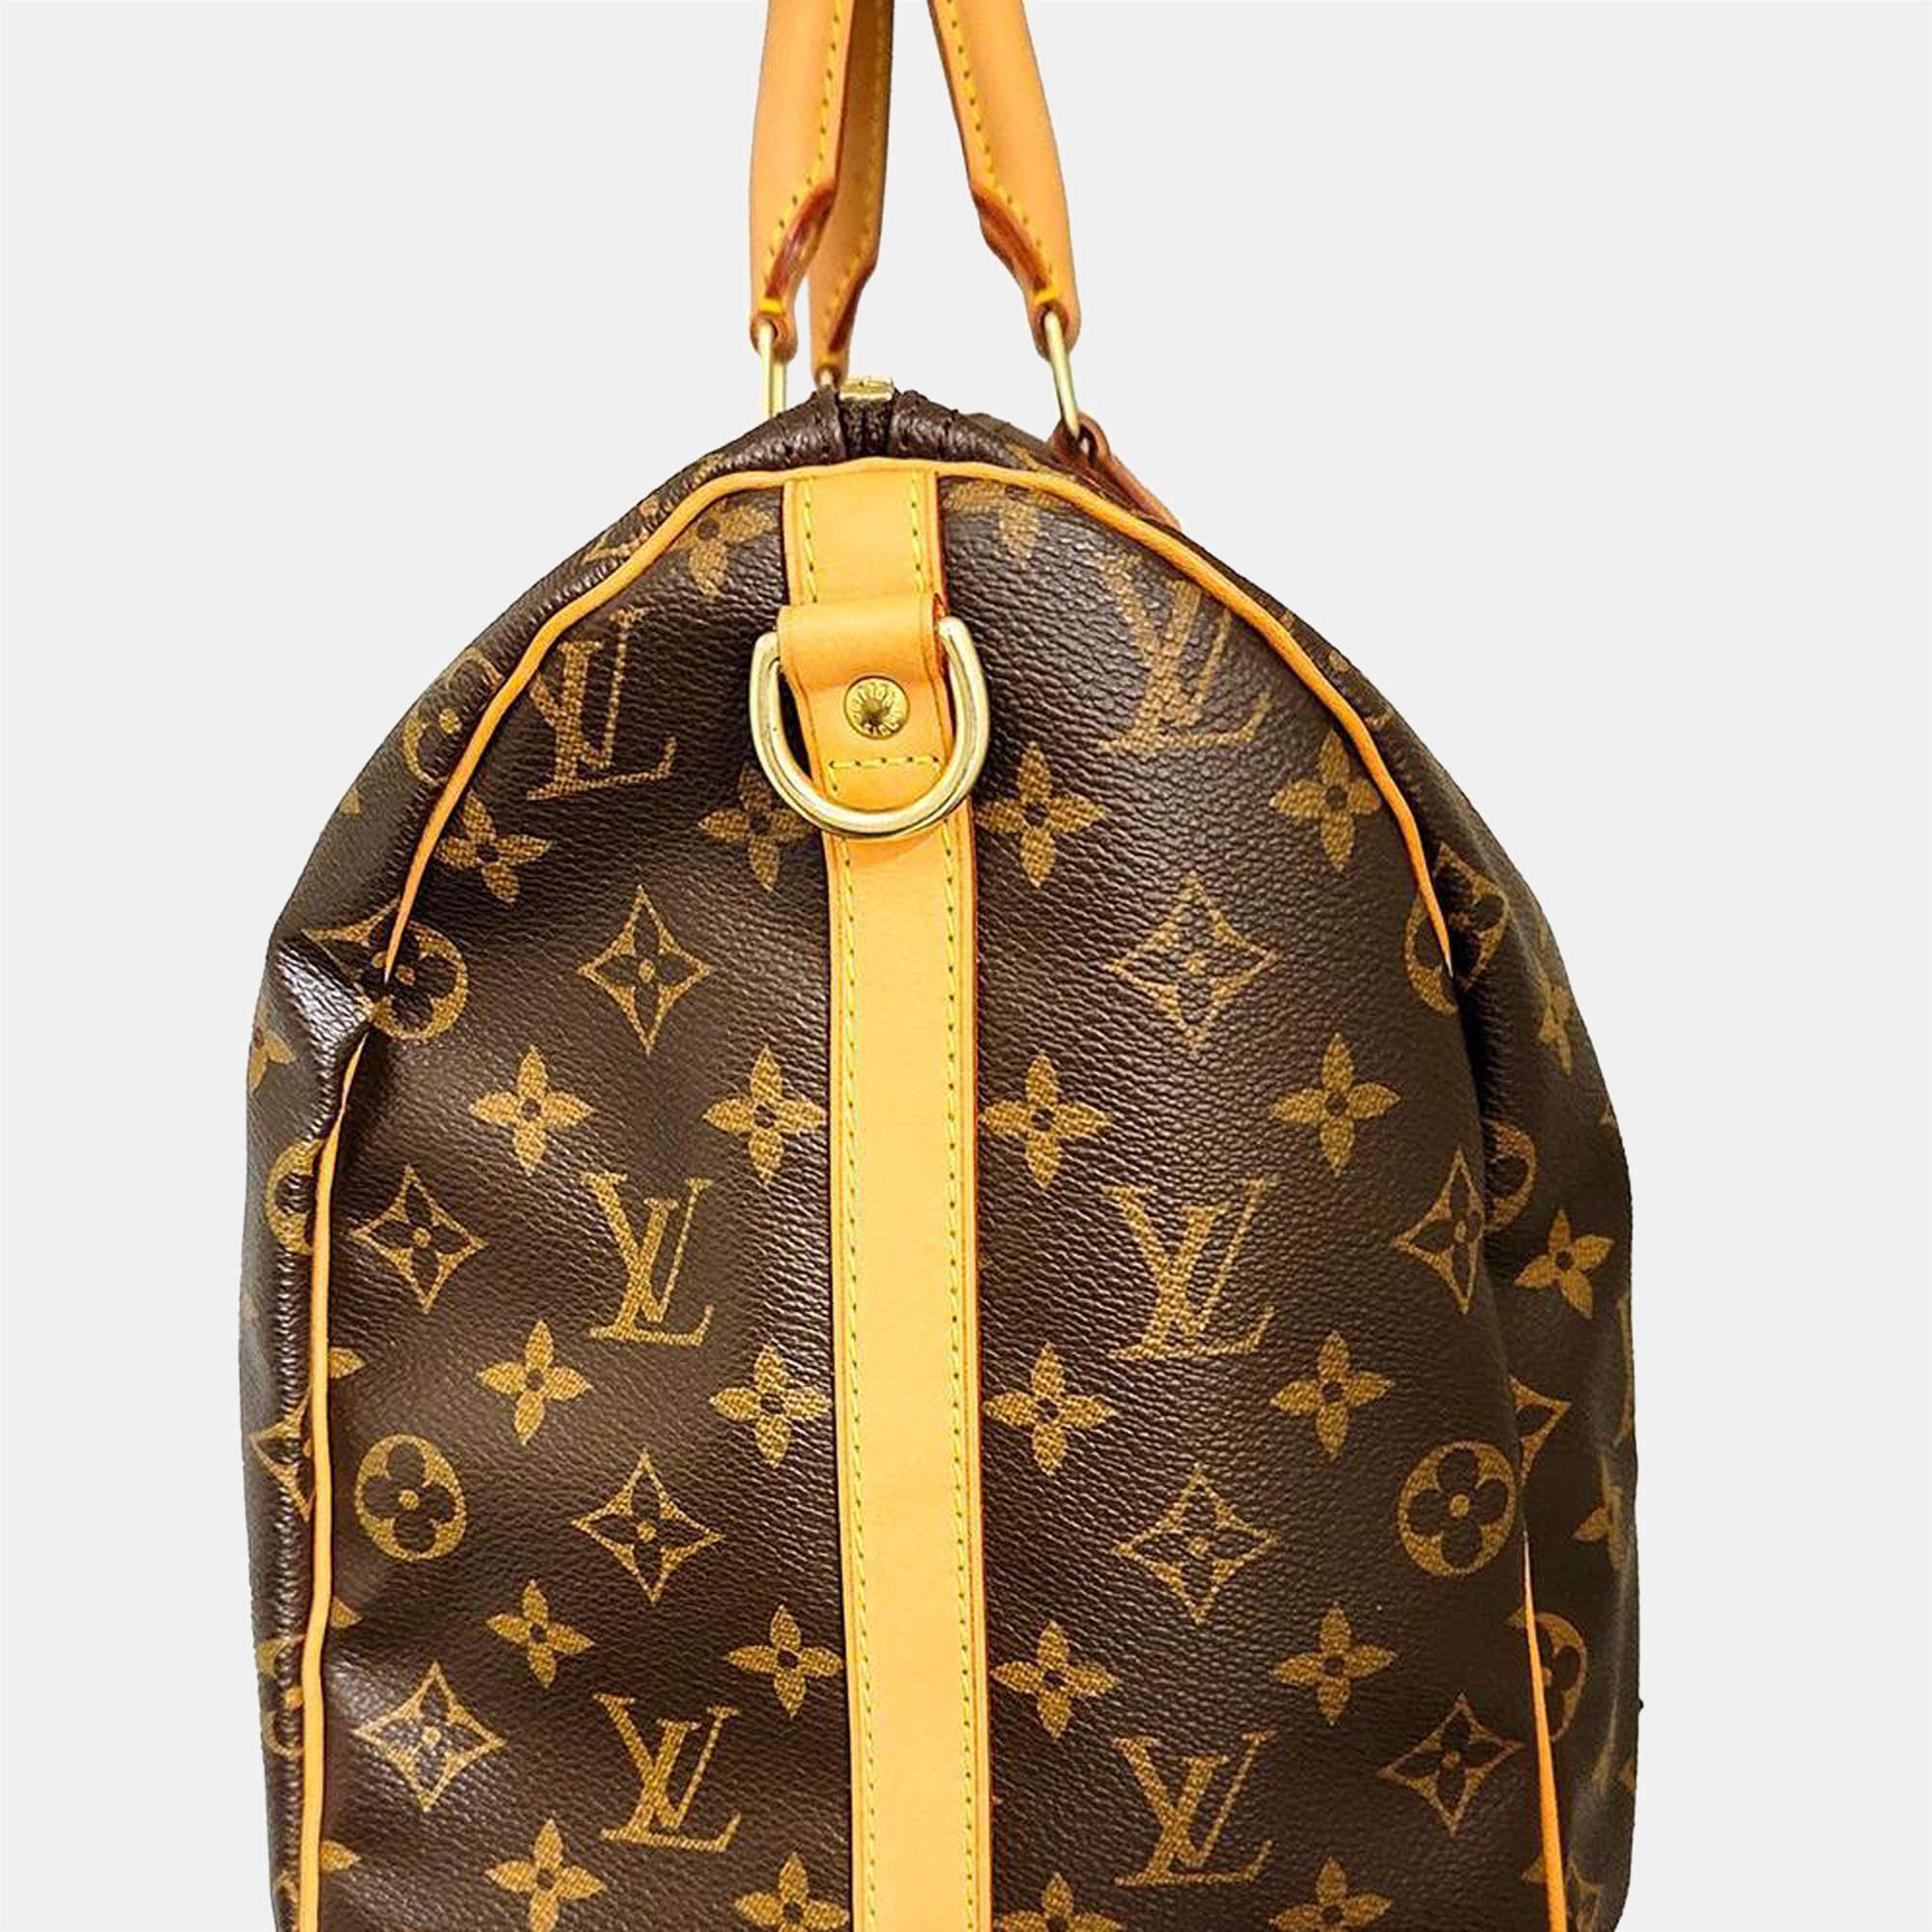 Louis Vuitton Speedy Bandouliere Bag Monogram Canvas 40 Brown